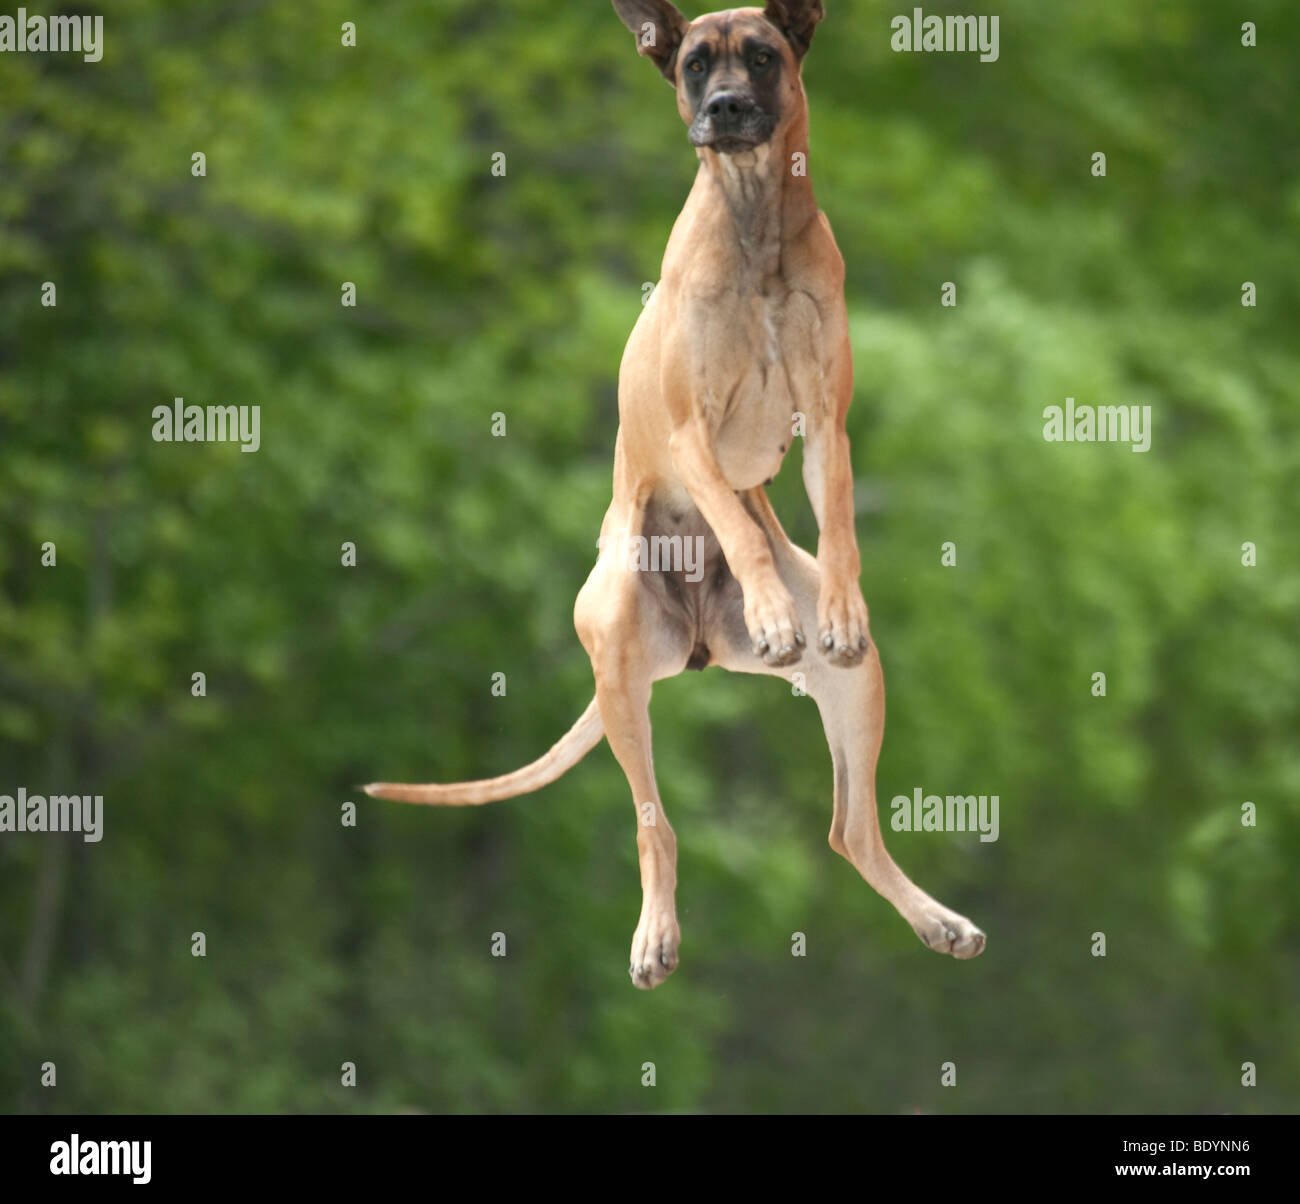 Alano cane salta in aria con entusiasmo Foto Stock